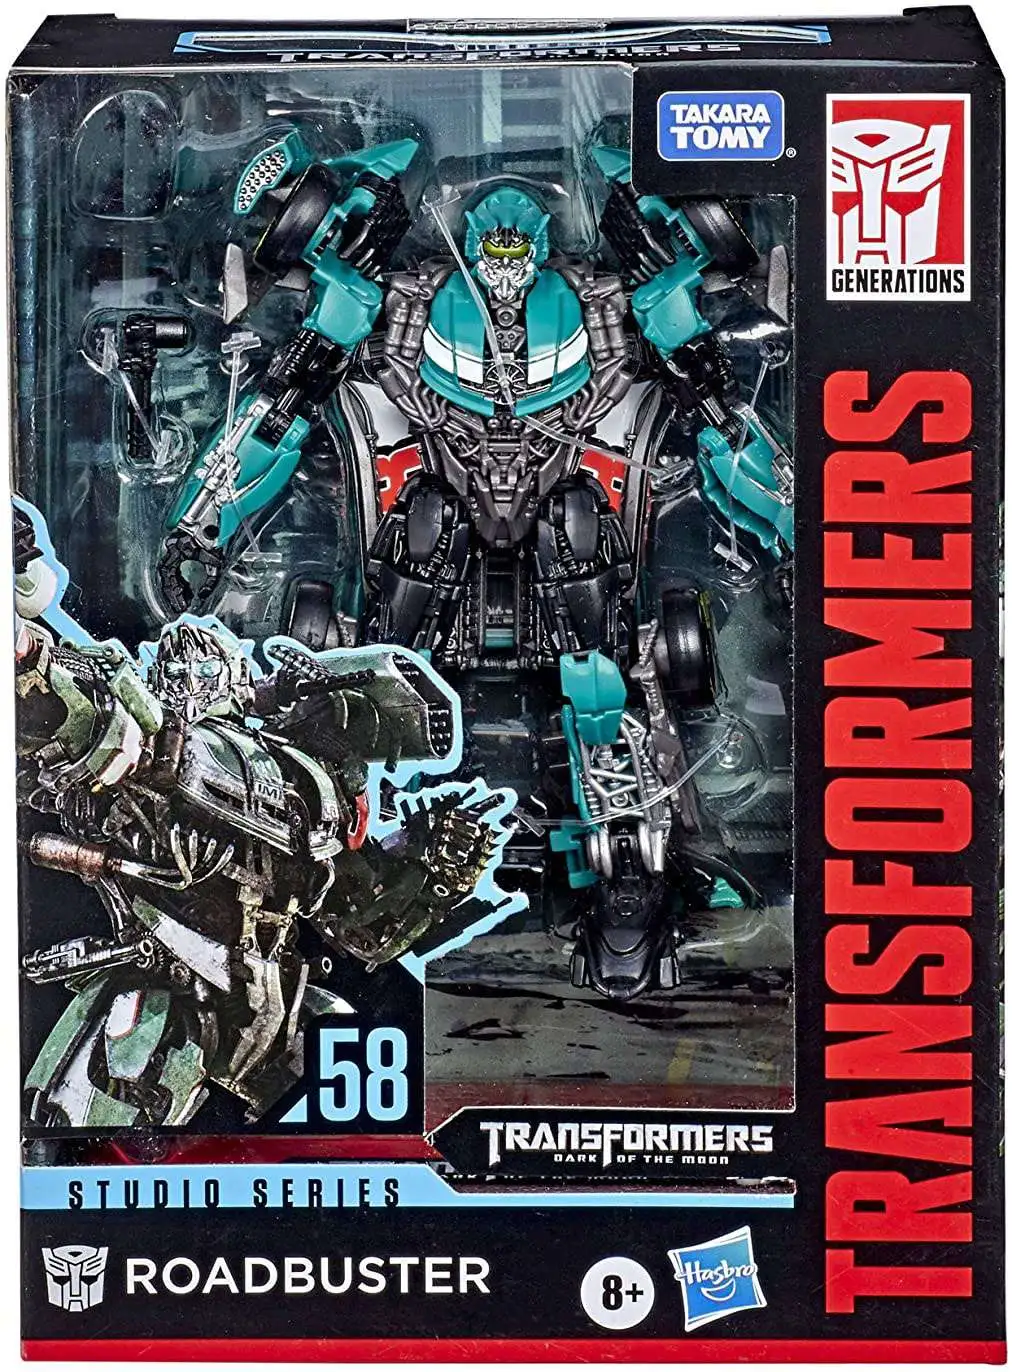 HASBRO Takara Tomy Generations Transformers Studio Series 5in #58 ROADBUSTER 